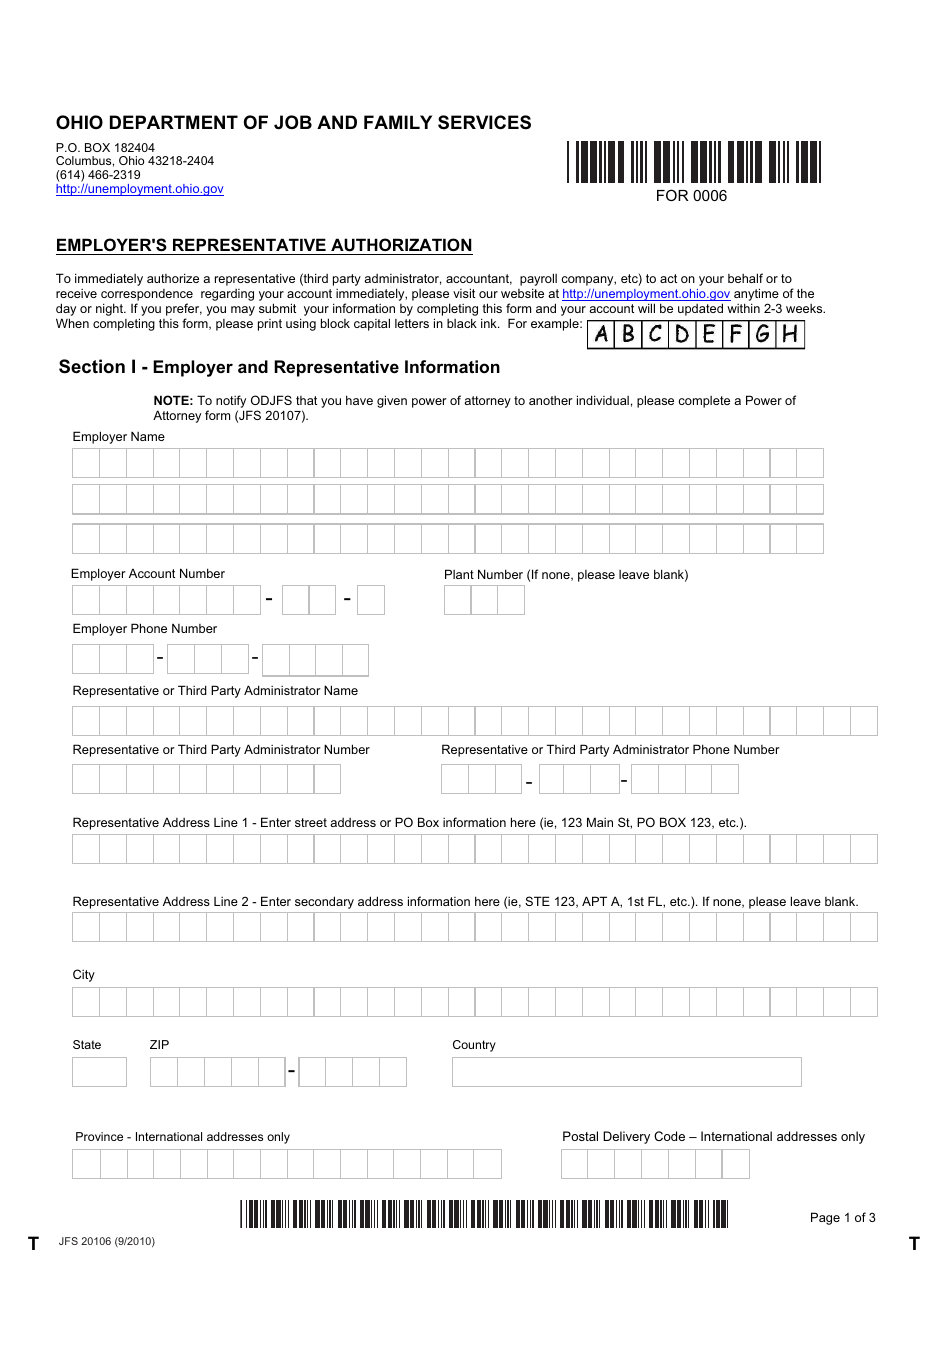 Form JFS20106 Employers Representative Authorization - Ohio, Page 1